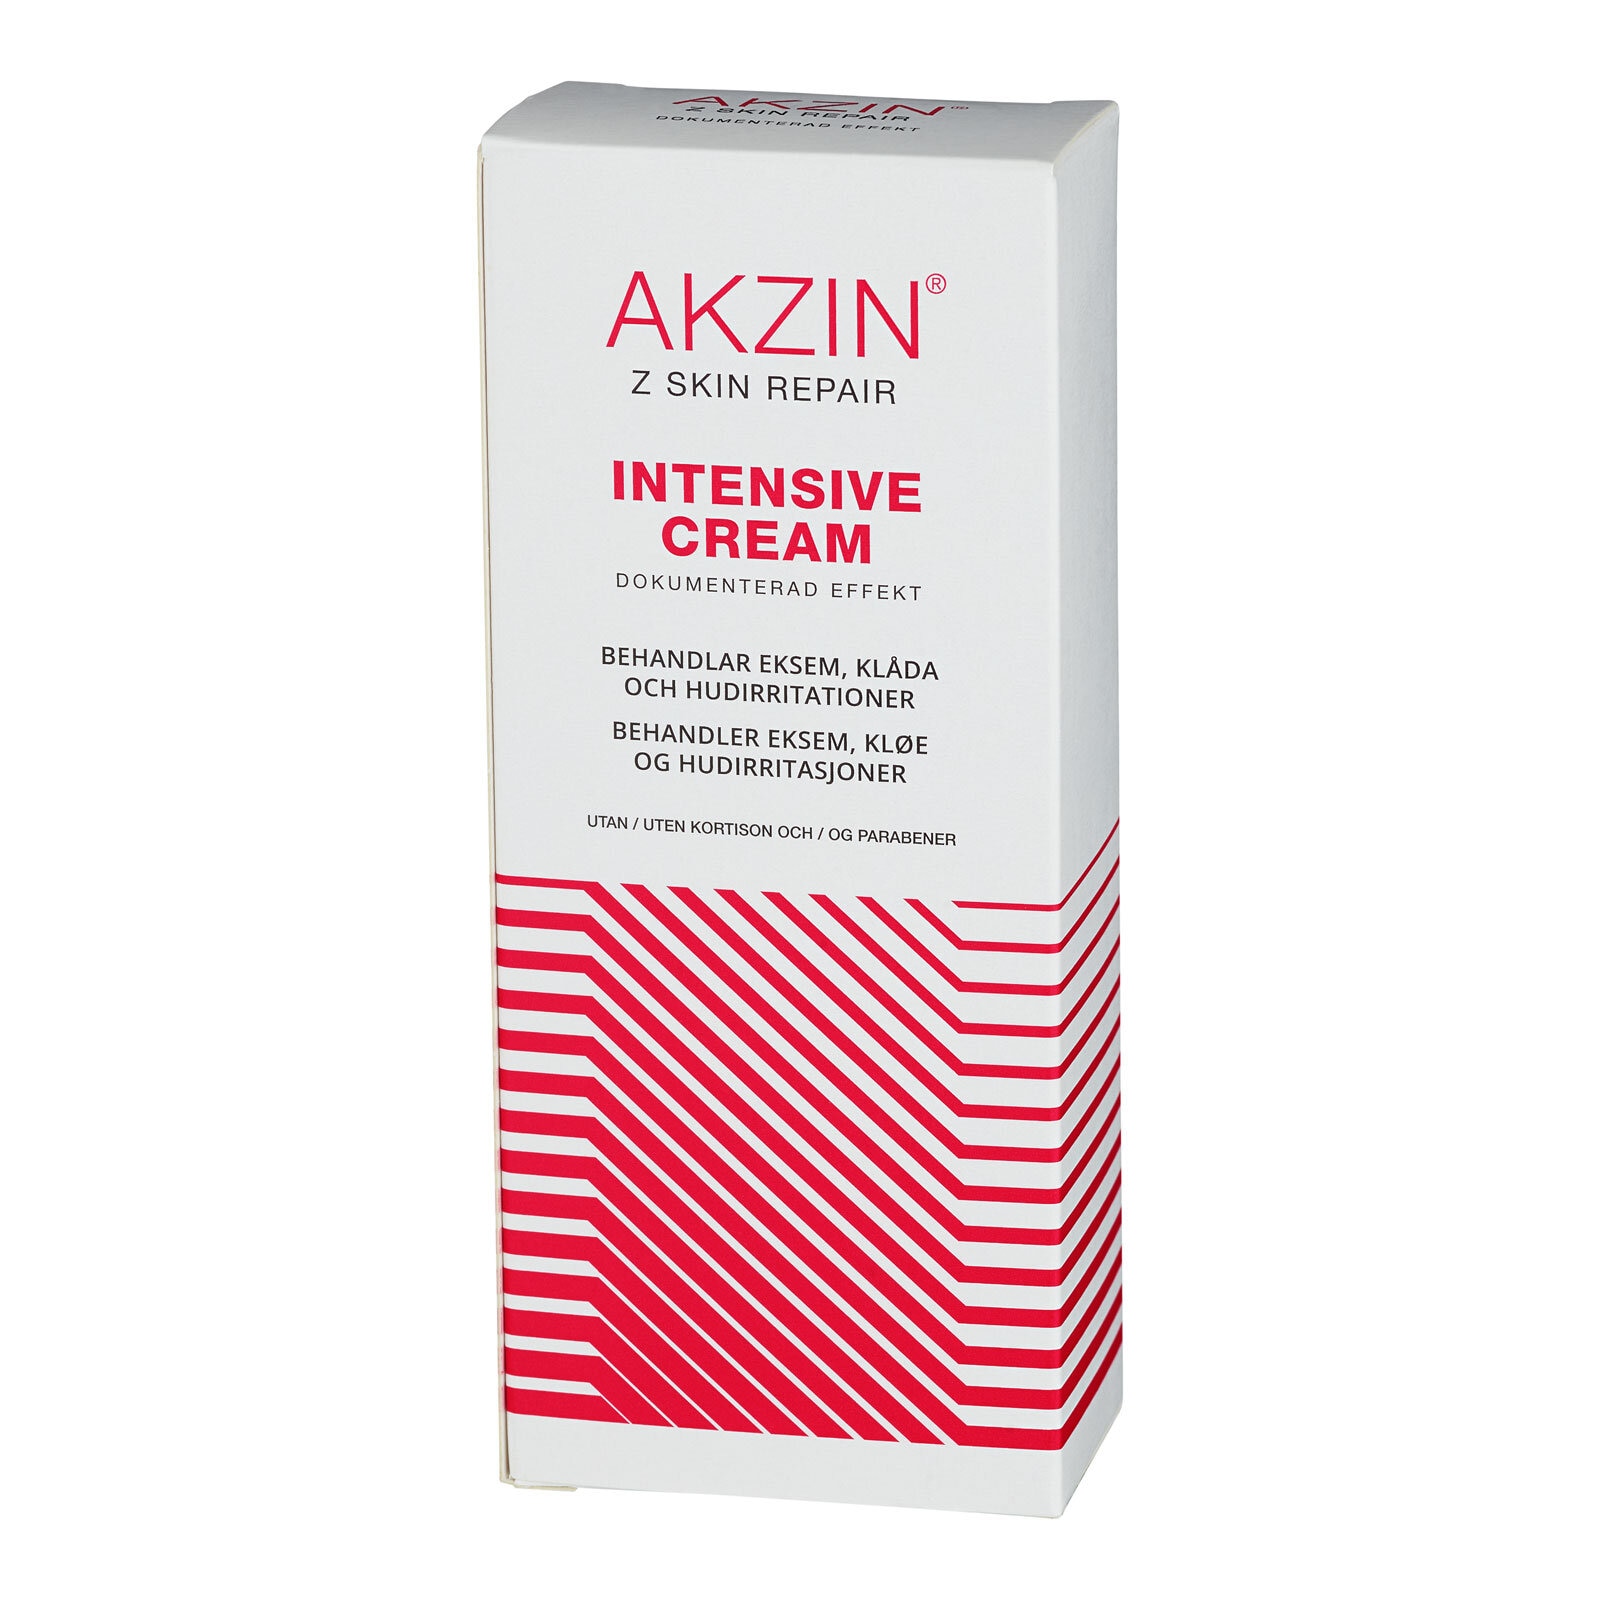 Akzin Z Skin Repair Intensive Cream